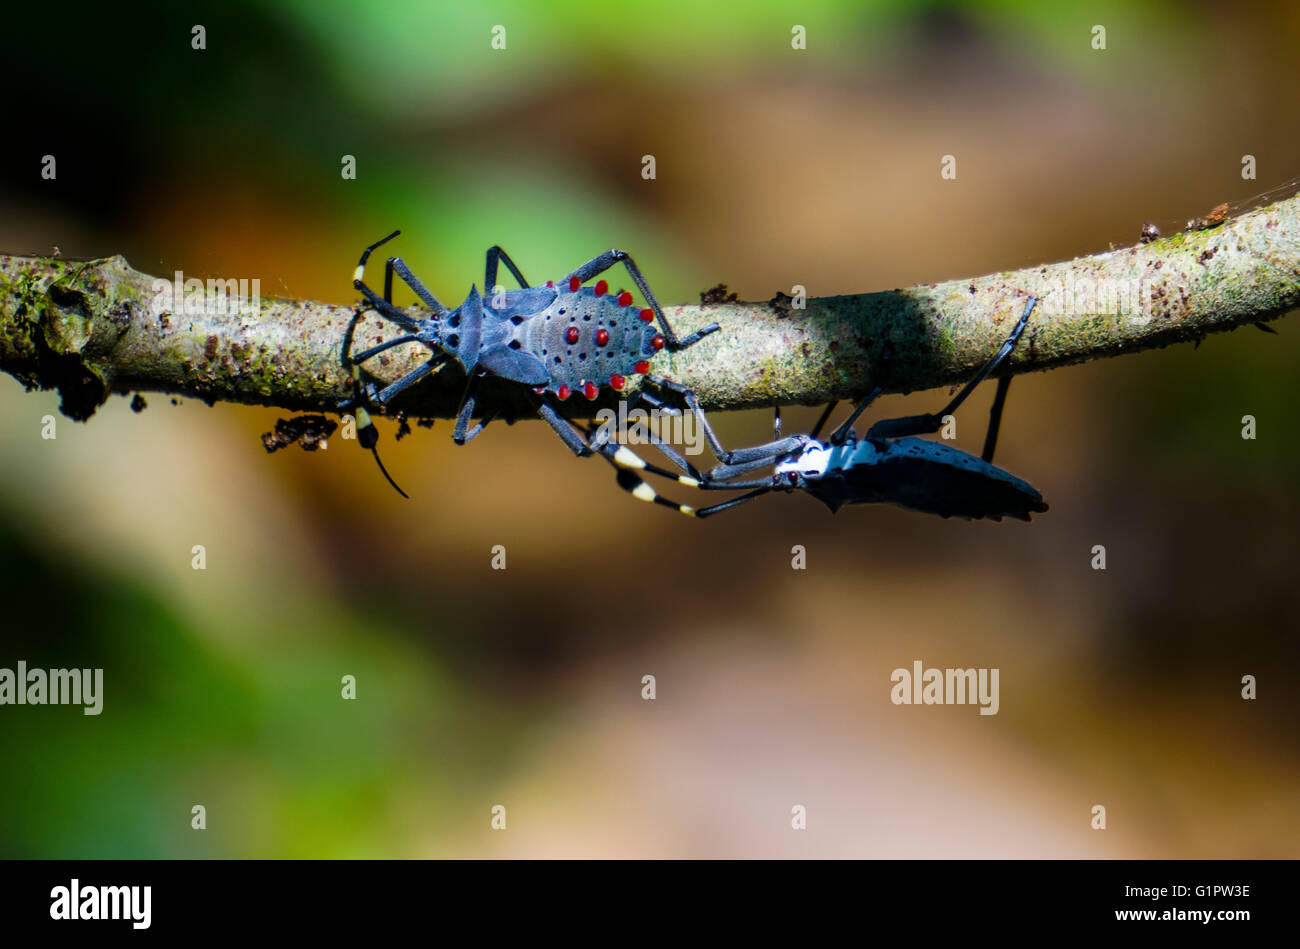 Heteroptera bugs in the amazonian rain forest Stock Photo